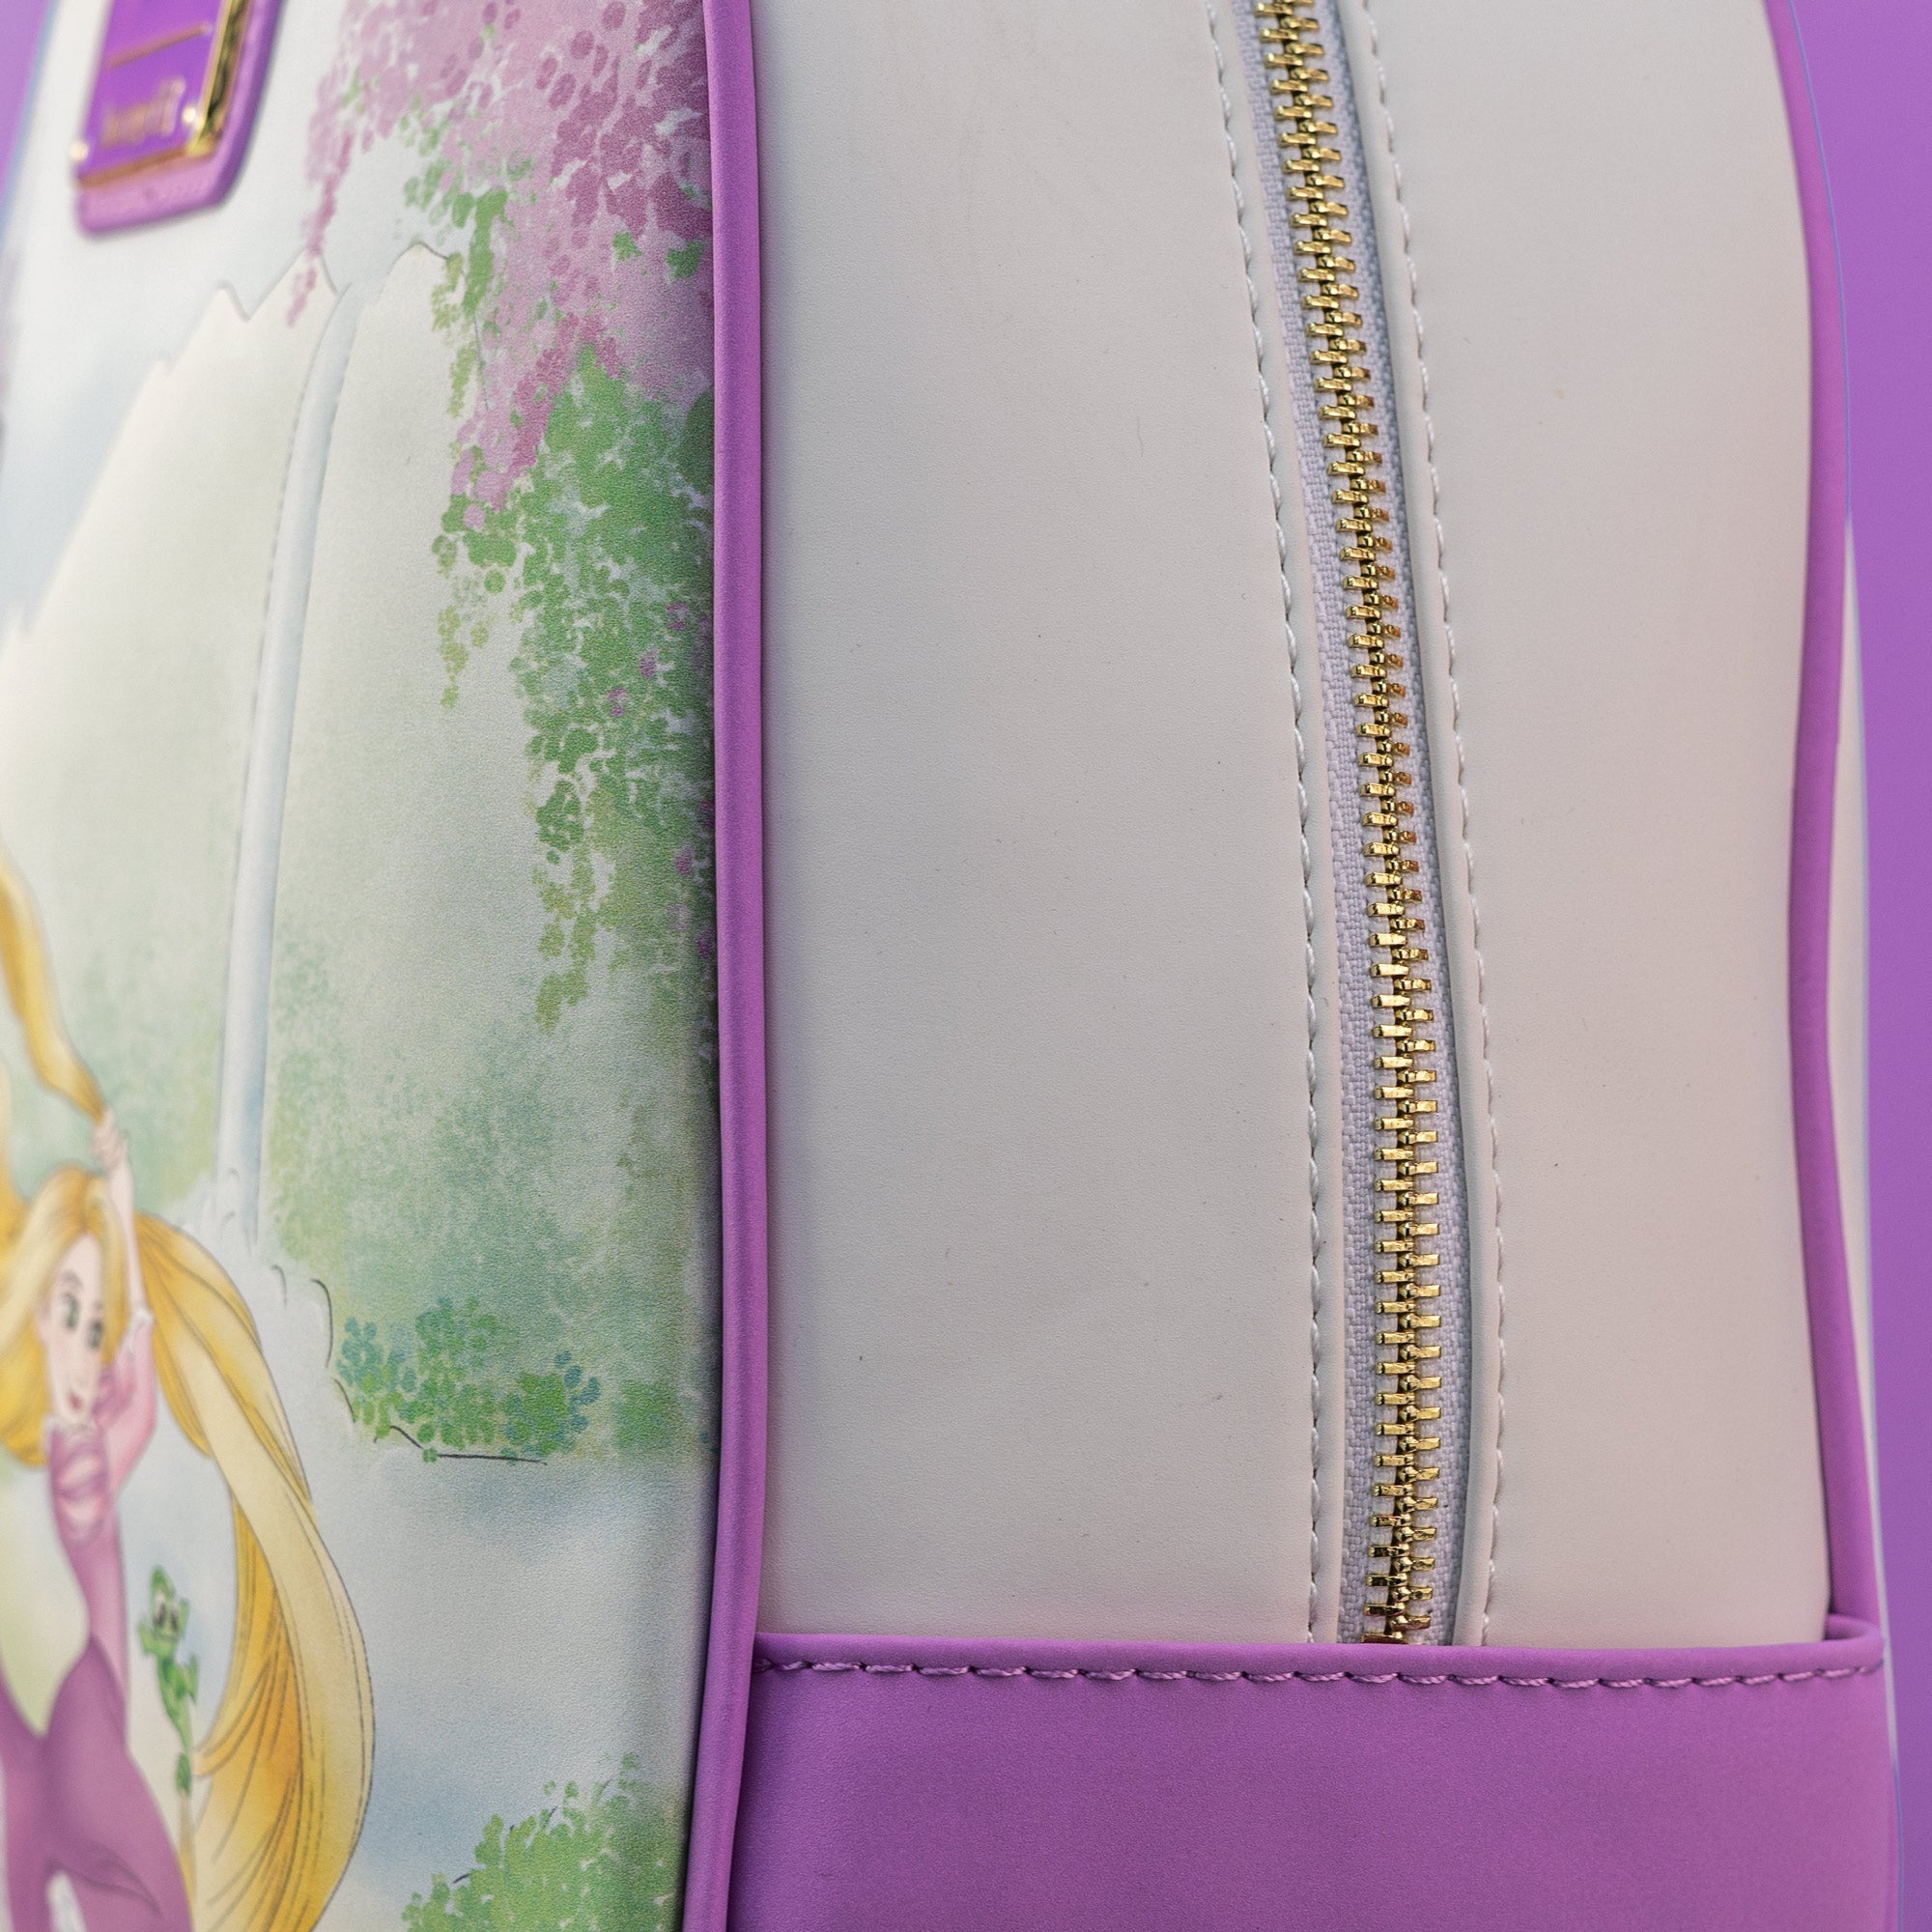 Loungefly x Disney Tangled Rapunzel Tower Scene Mini Backpack - GeekCore